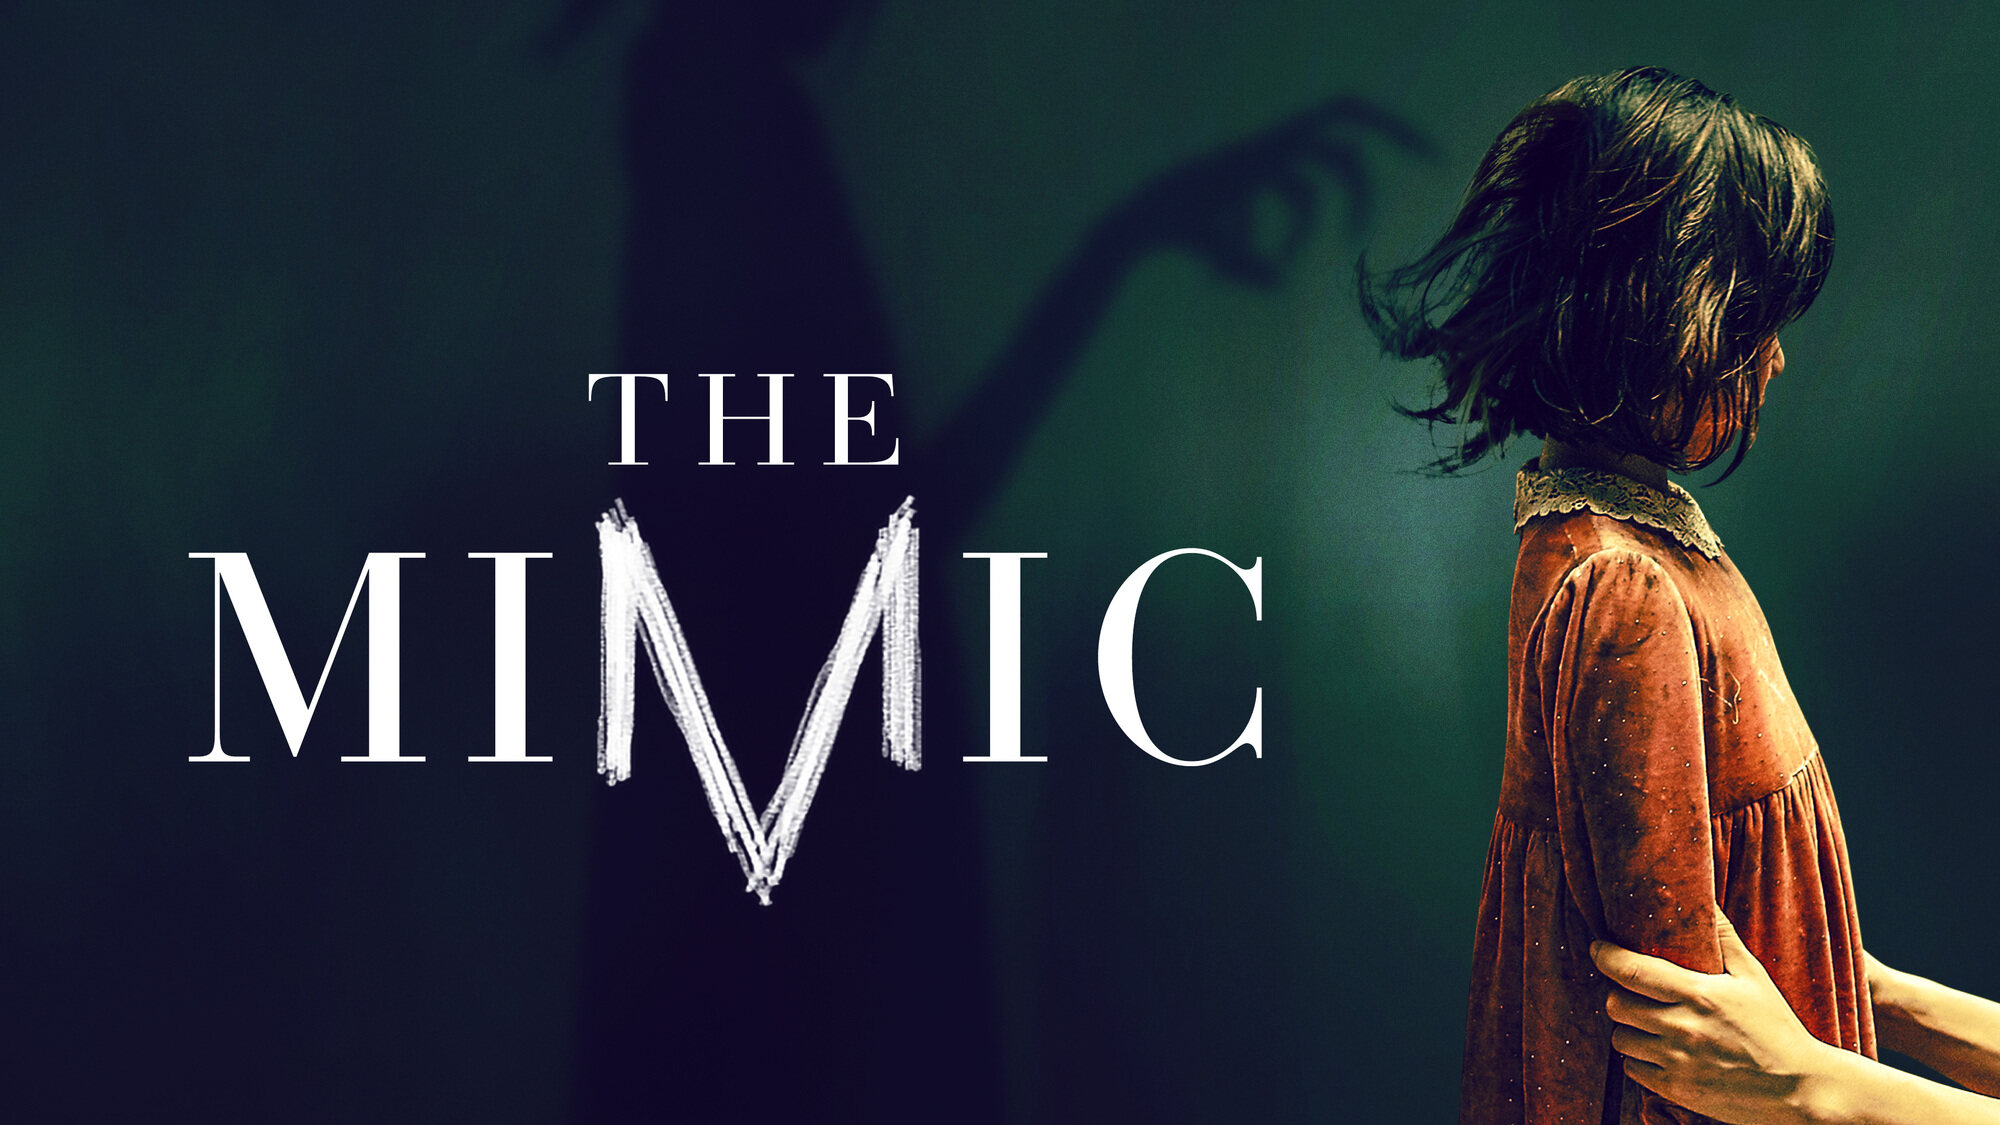 Watch Mimic: The Director's Cut